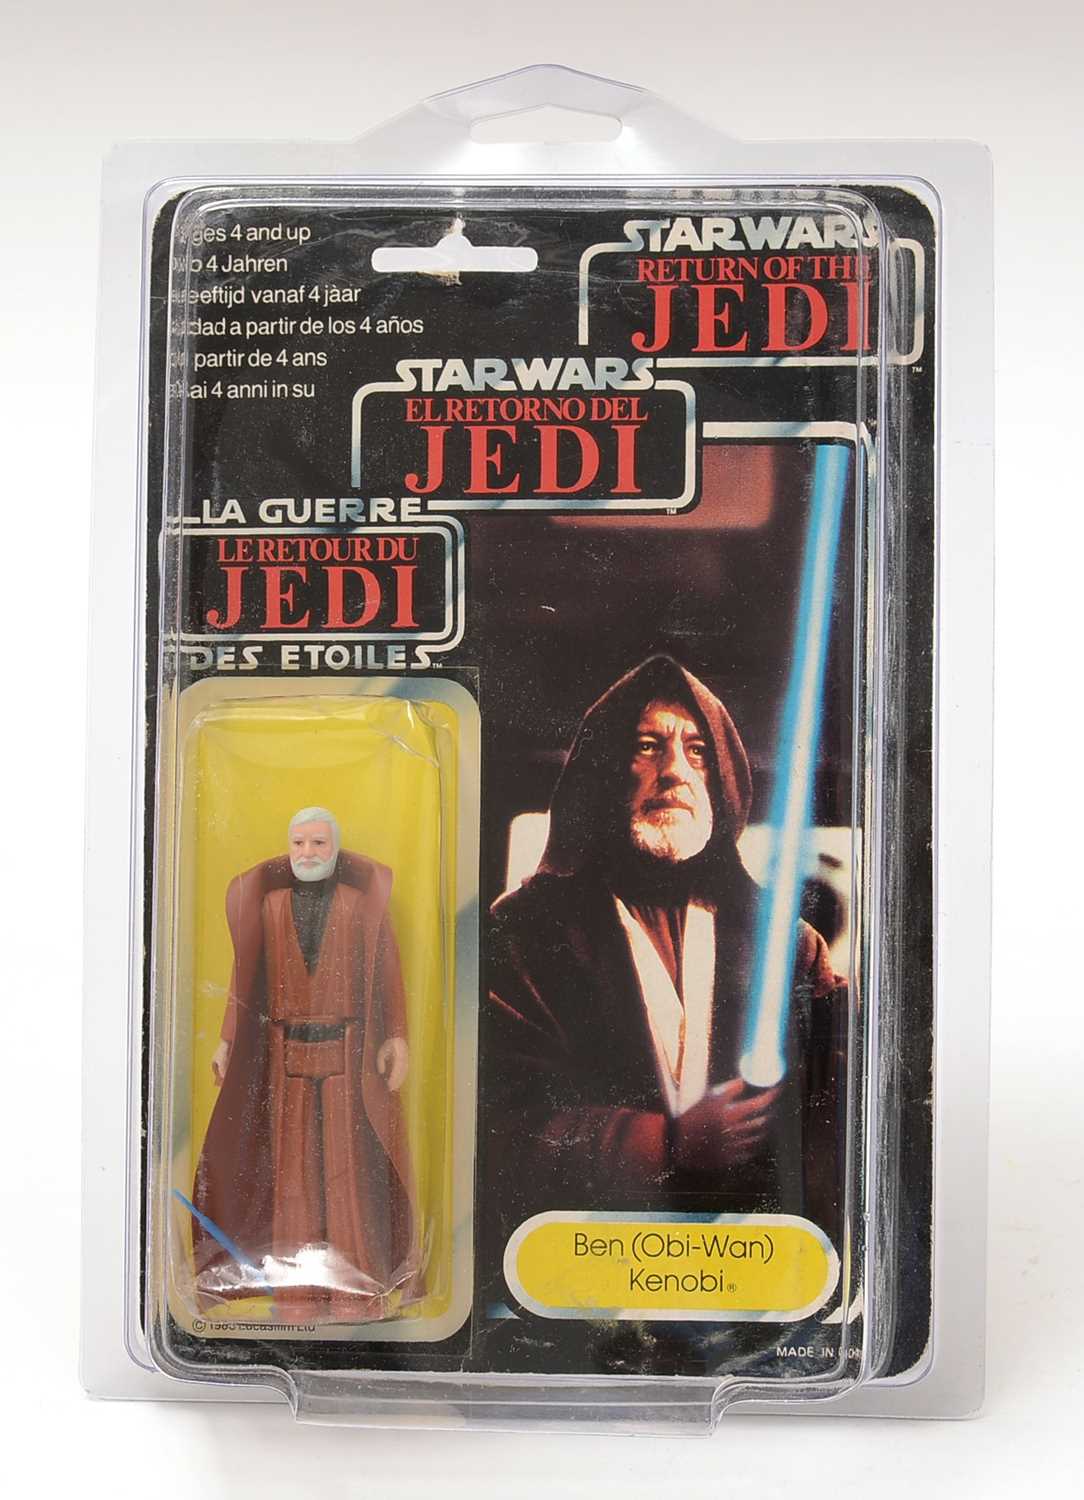 Lot 265 - Star Wars Return of the Jedi Ben (Obi-Wan) Kenobi carded figure